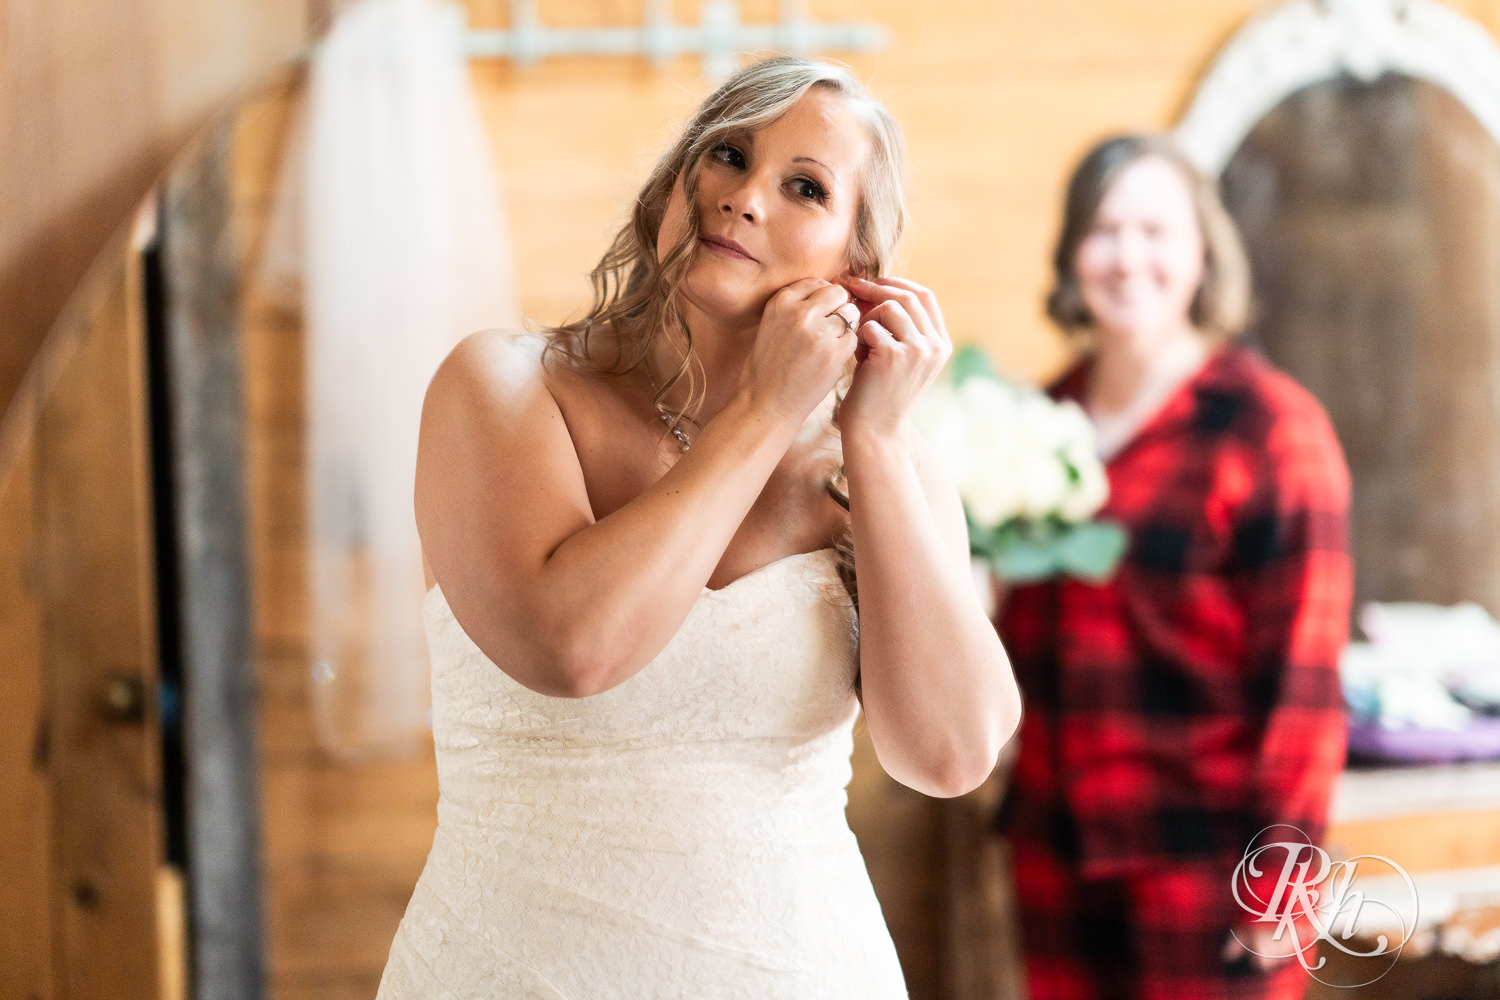 Bride puts in earrings on wedding day at Almquist Farm in Hastings, Minnesota.